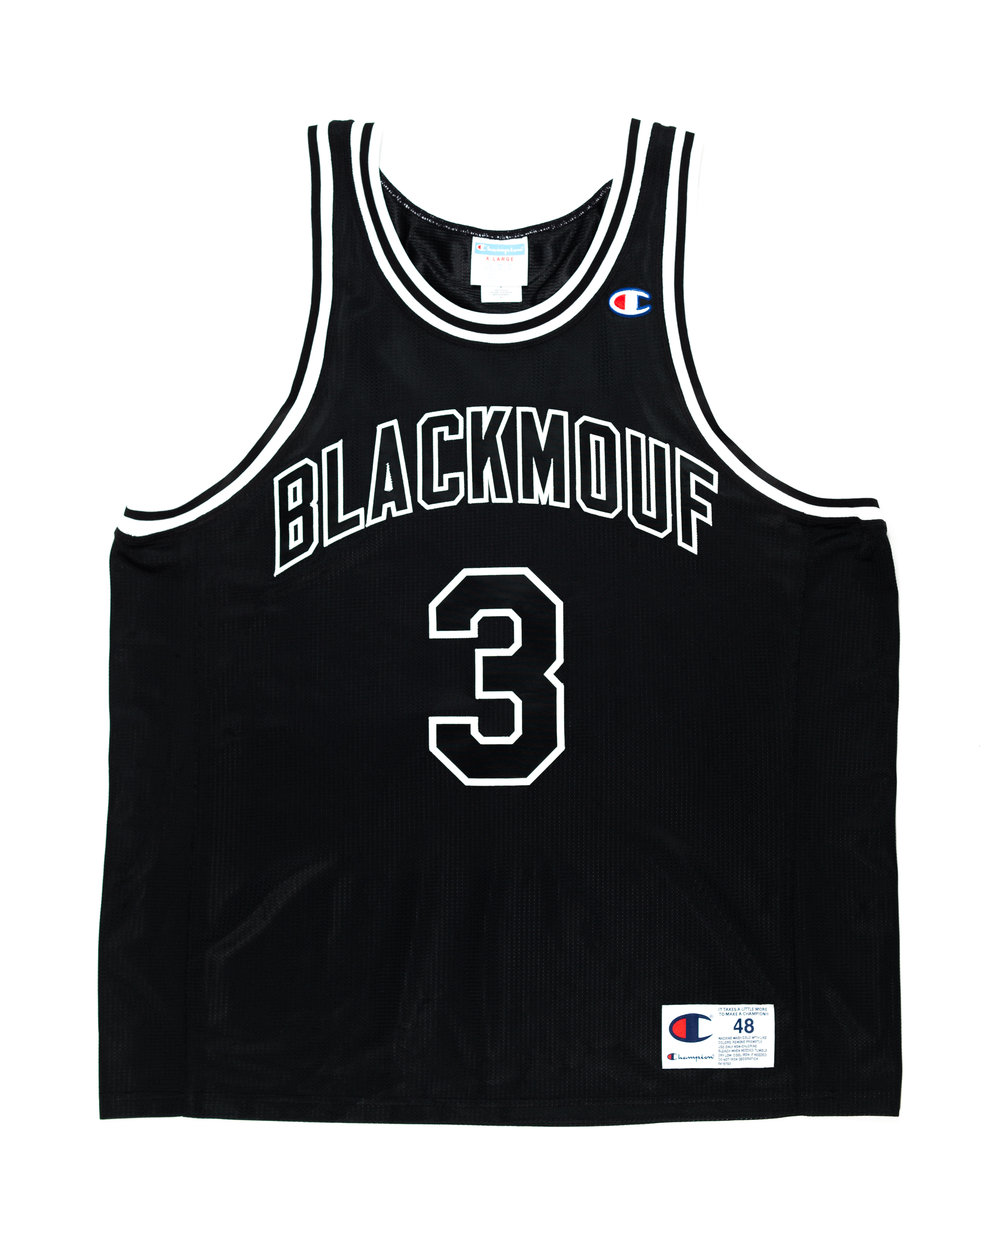 Champion x Blackmouf Basketball Jersey — BLACKMOUF